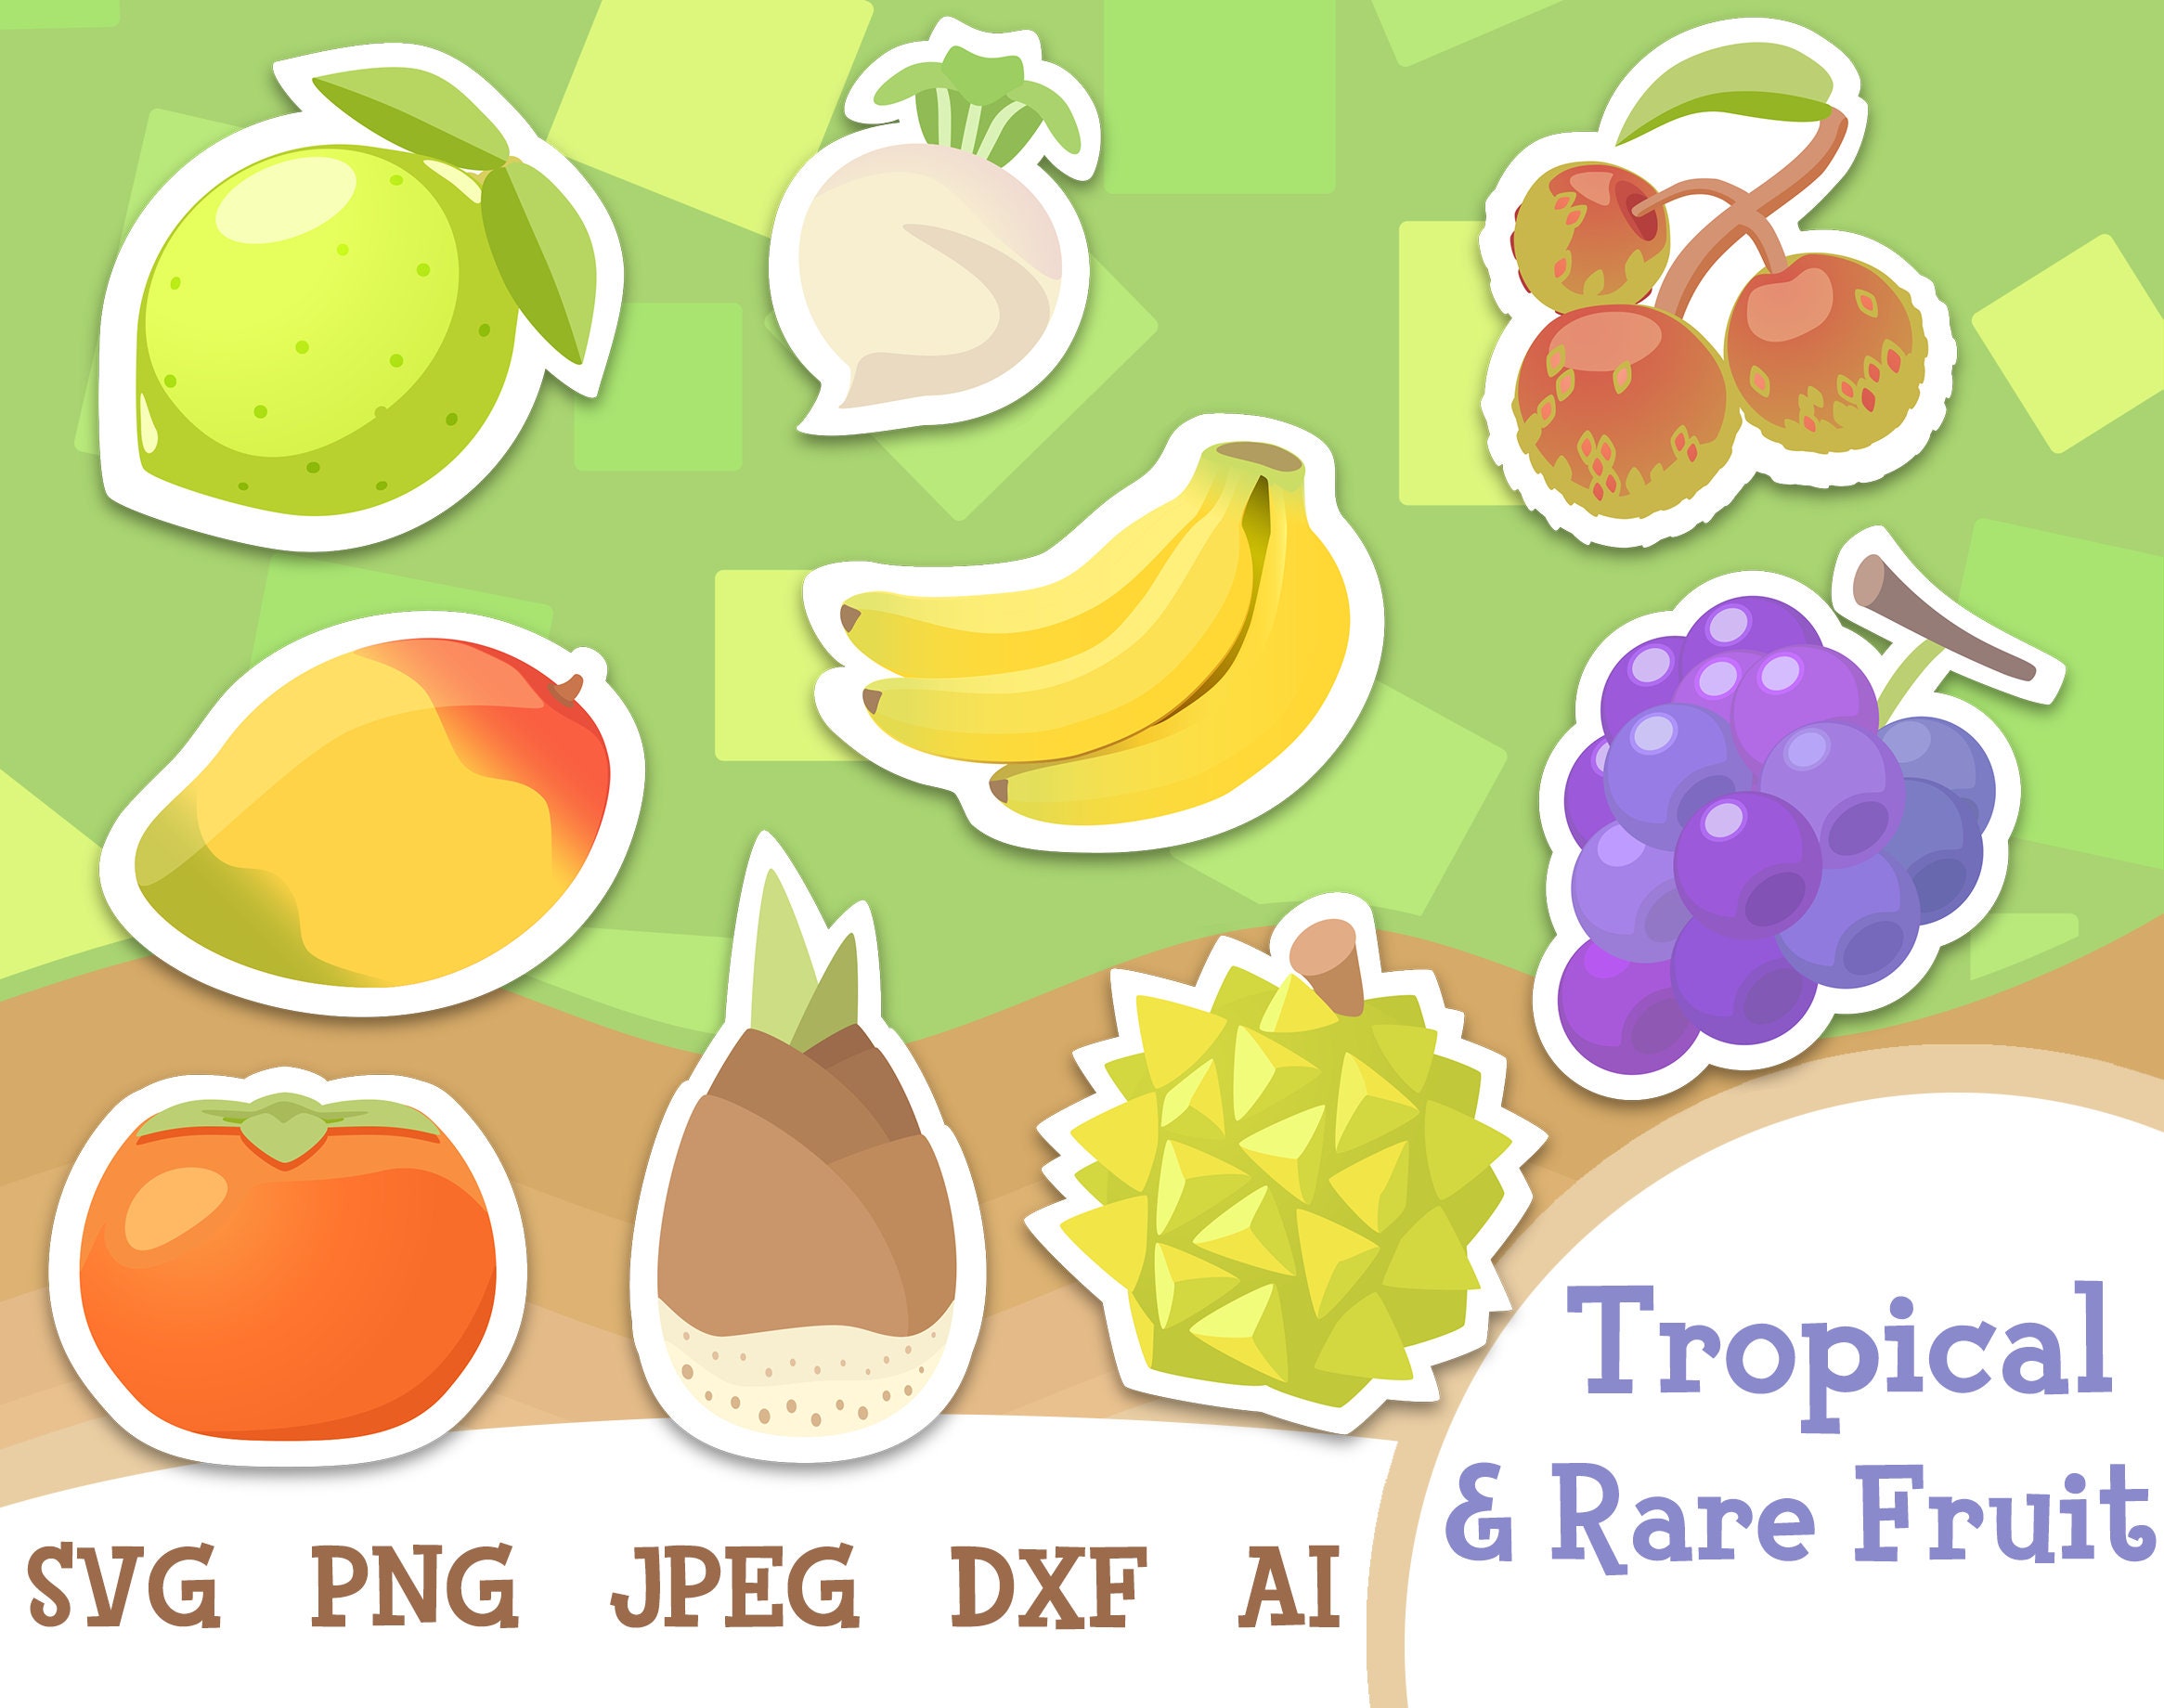 Animal Crossing Tropical & Rare Fruit Pocket Camp New Leaf - Etsy